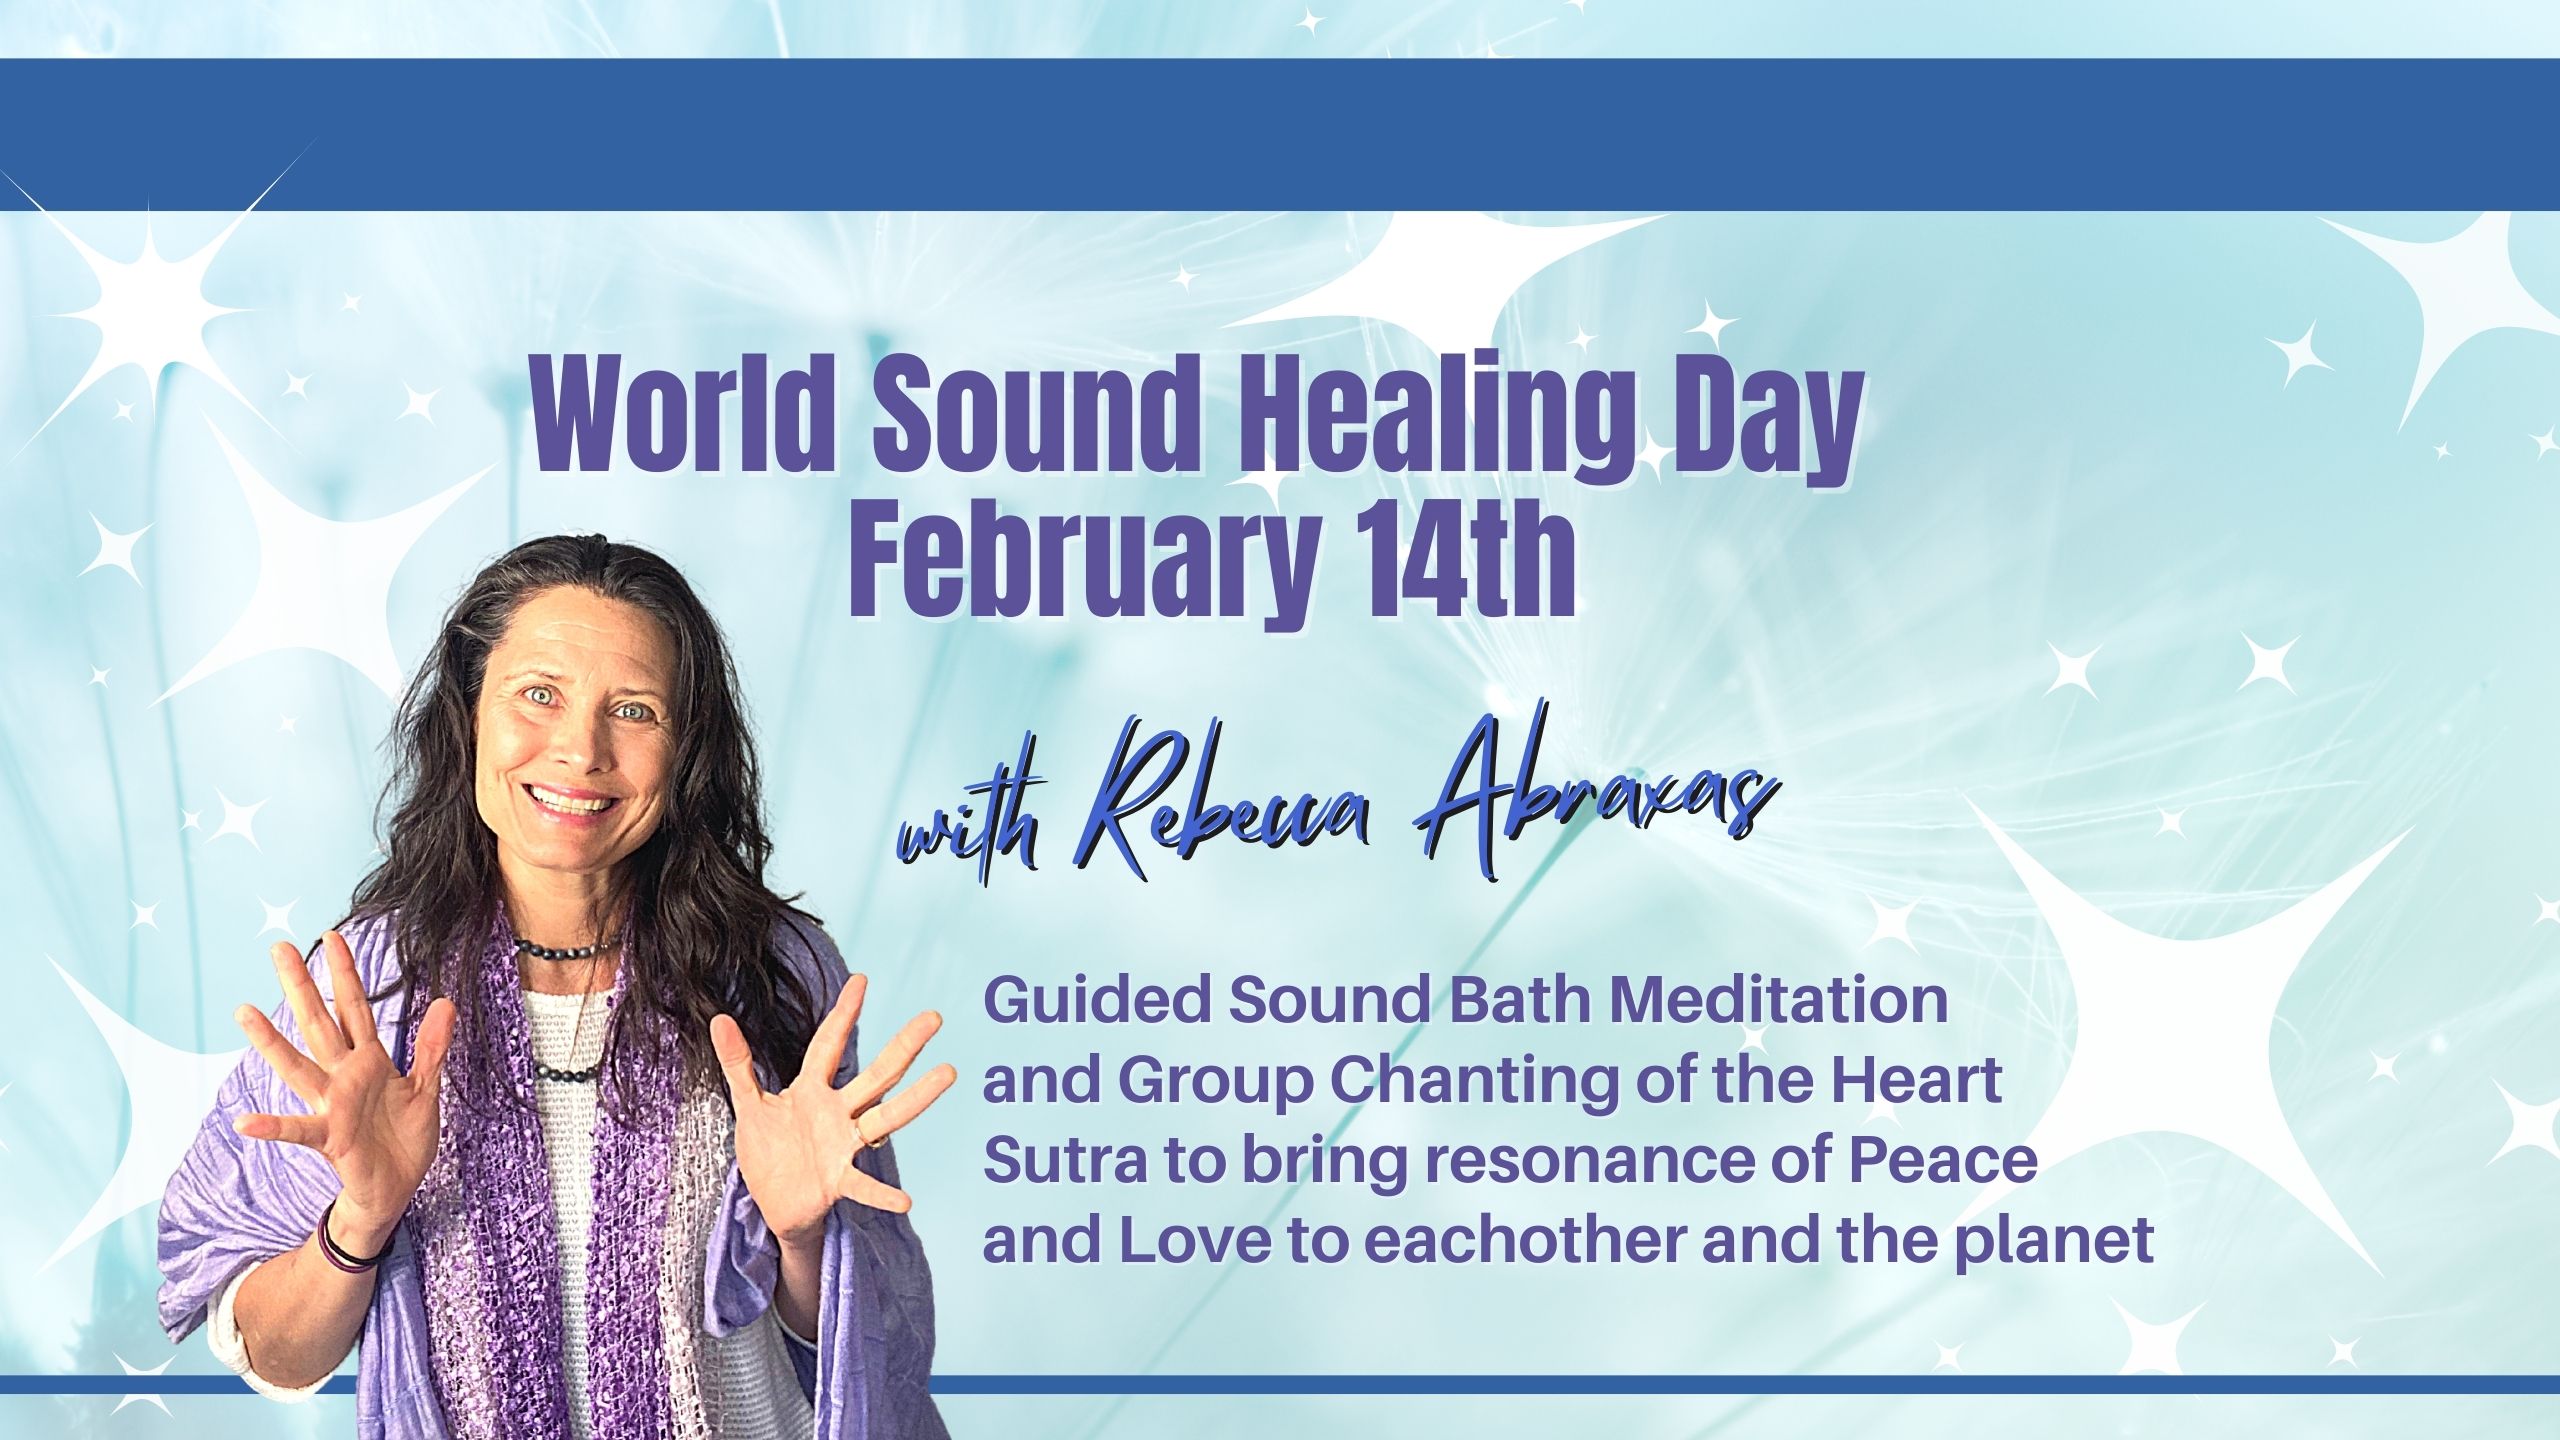 World Sound Healing Day Sound Bath & Heart Sutra Experience